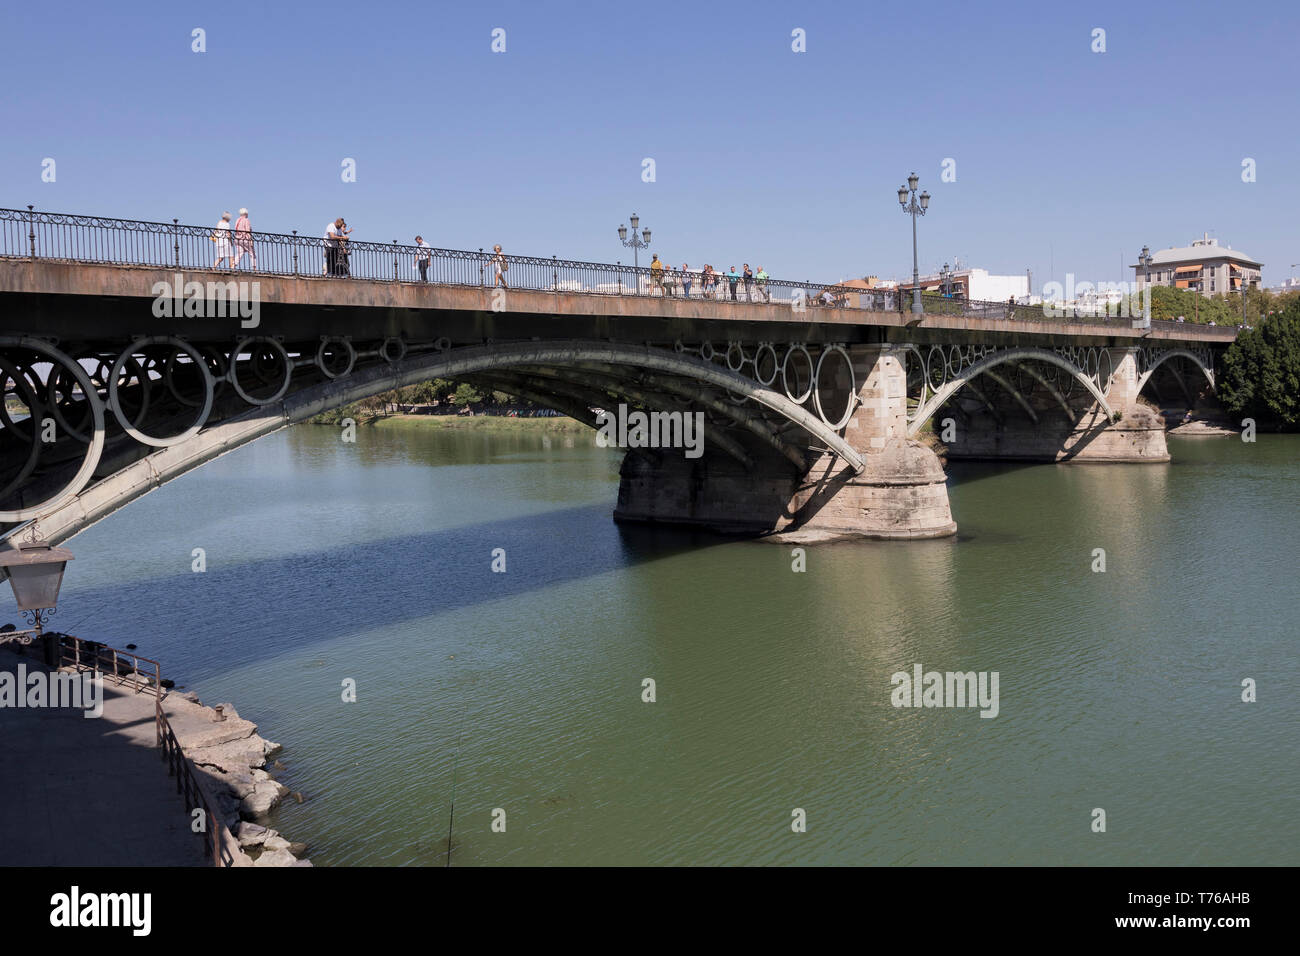 Puente de Triana Triana (pont) Sevilla, Espagne. Banque D'Images